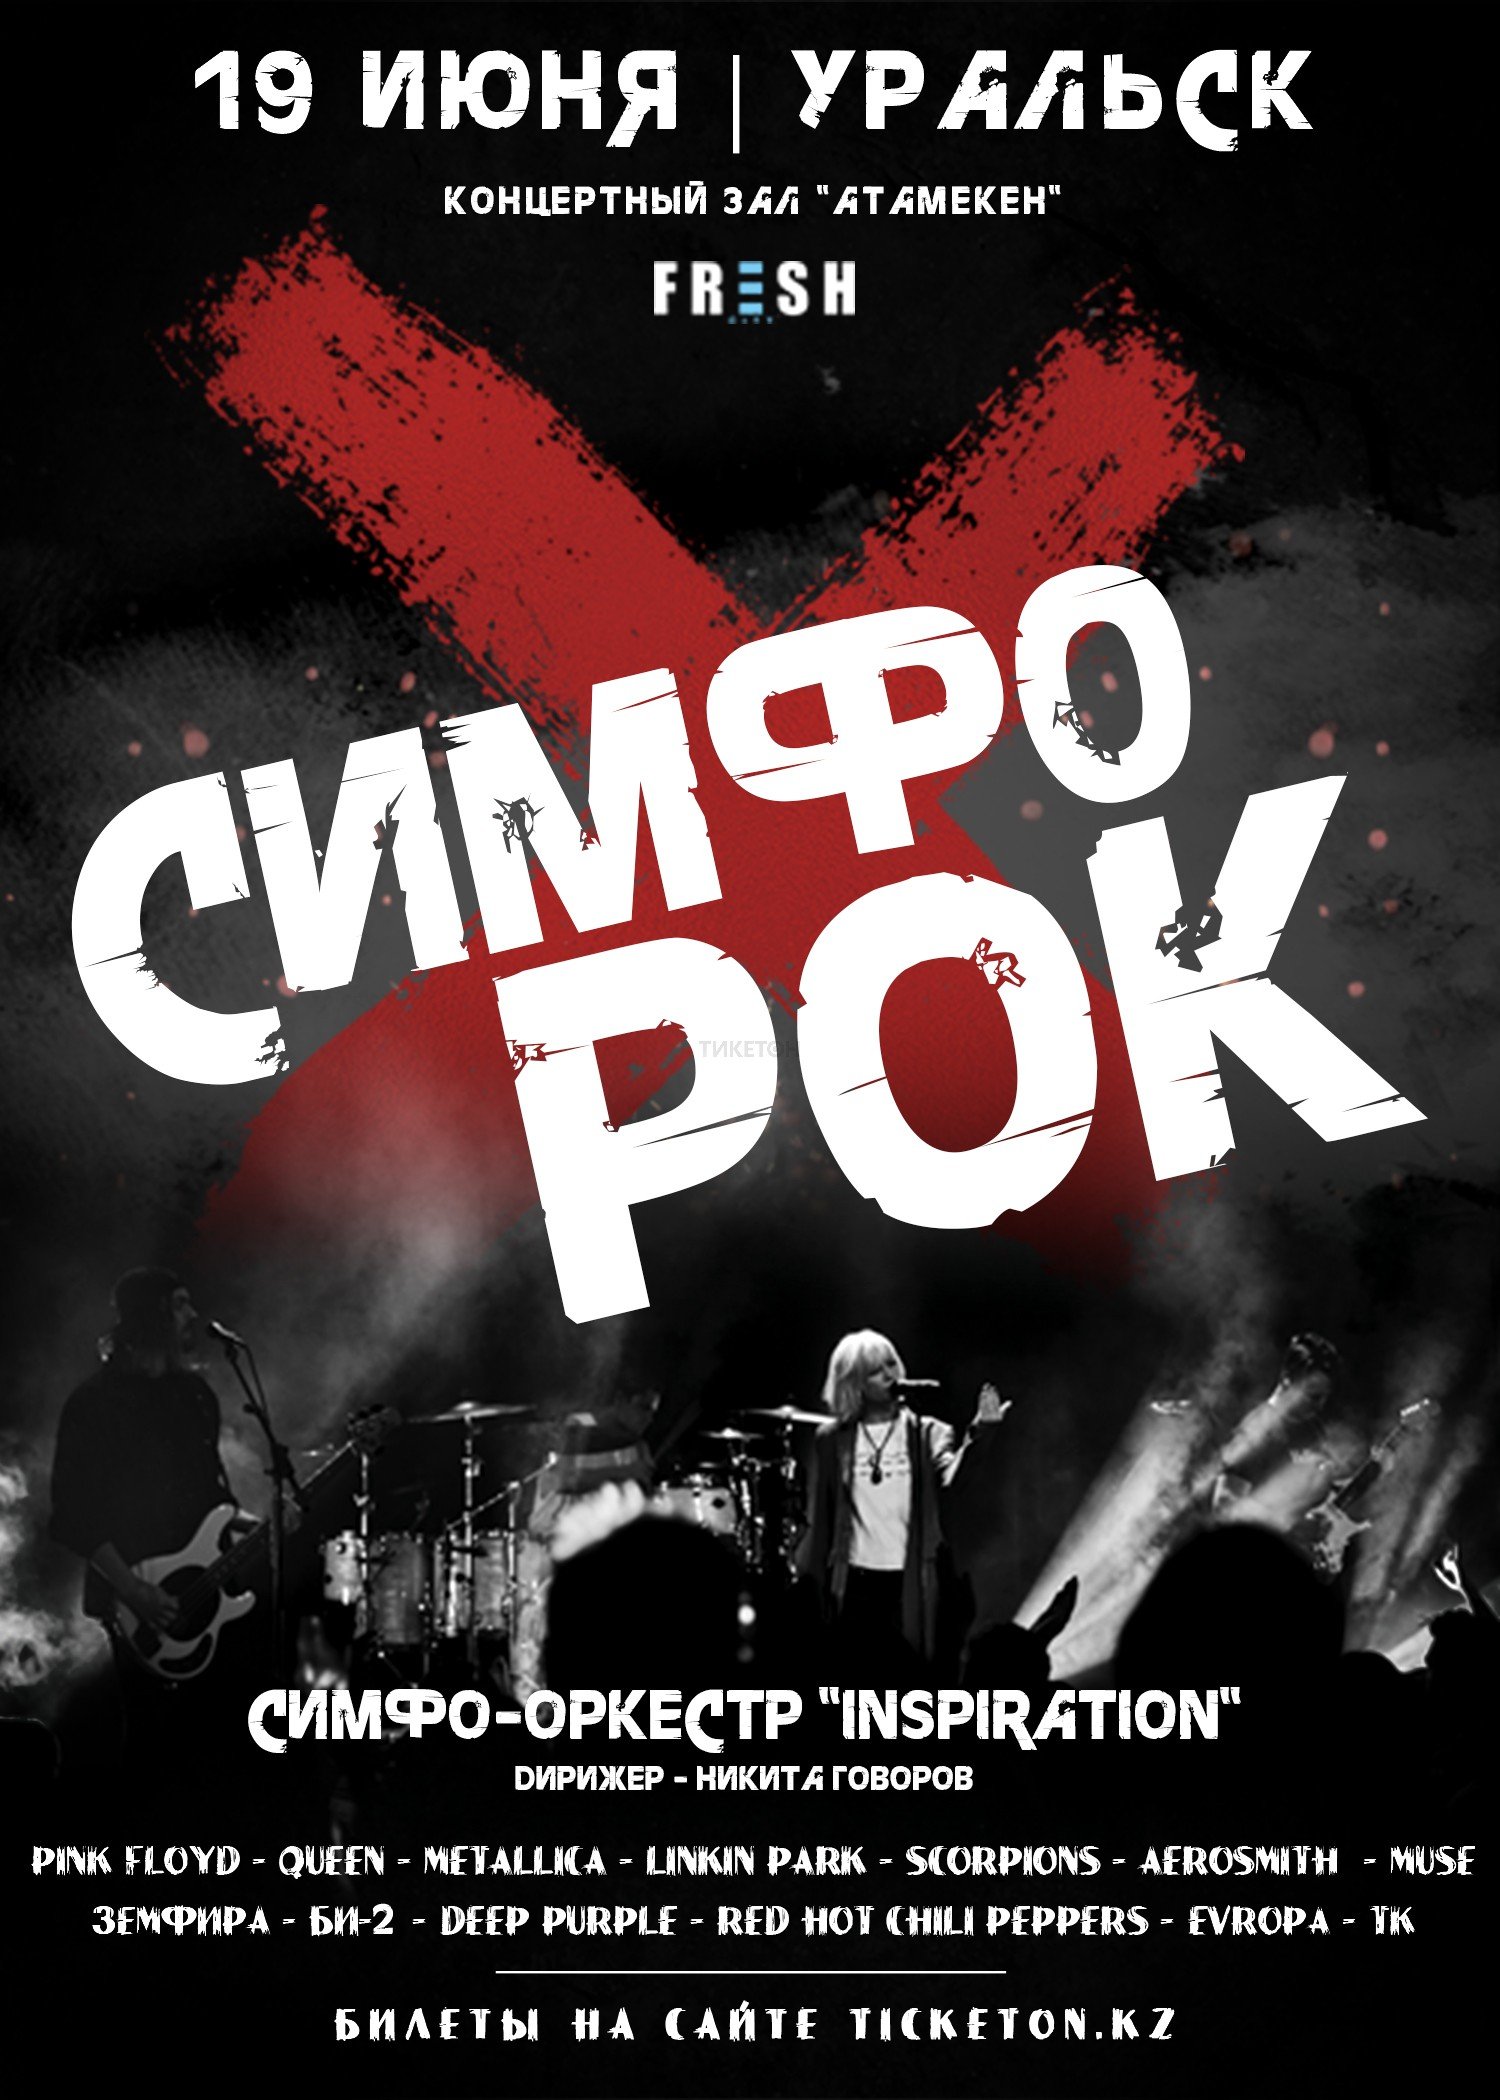 The INSPIRATION Symphony Orchestra in Uralsk